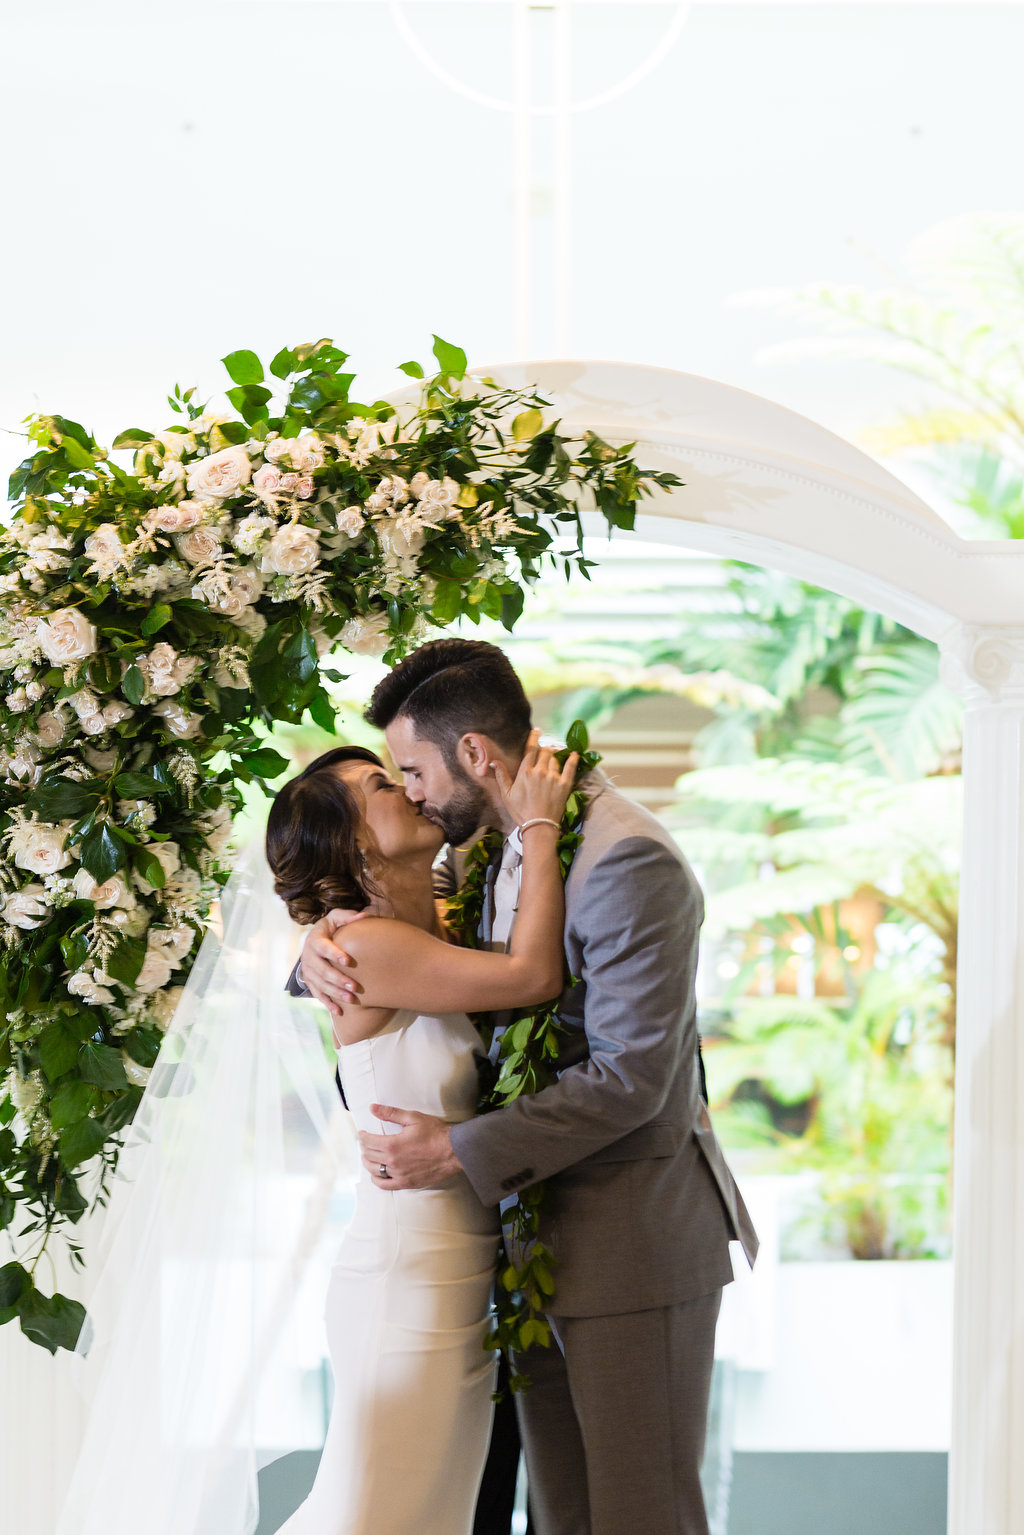 Gorgeous Wedding Photos - Hawaii Wedding Venue - The Overwhelmed Bride Wedding Blog